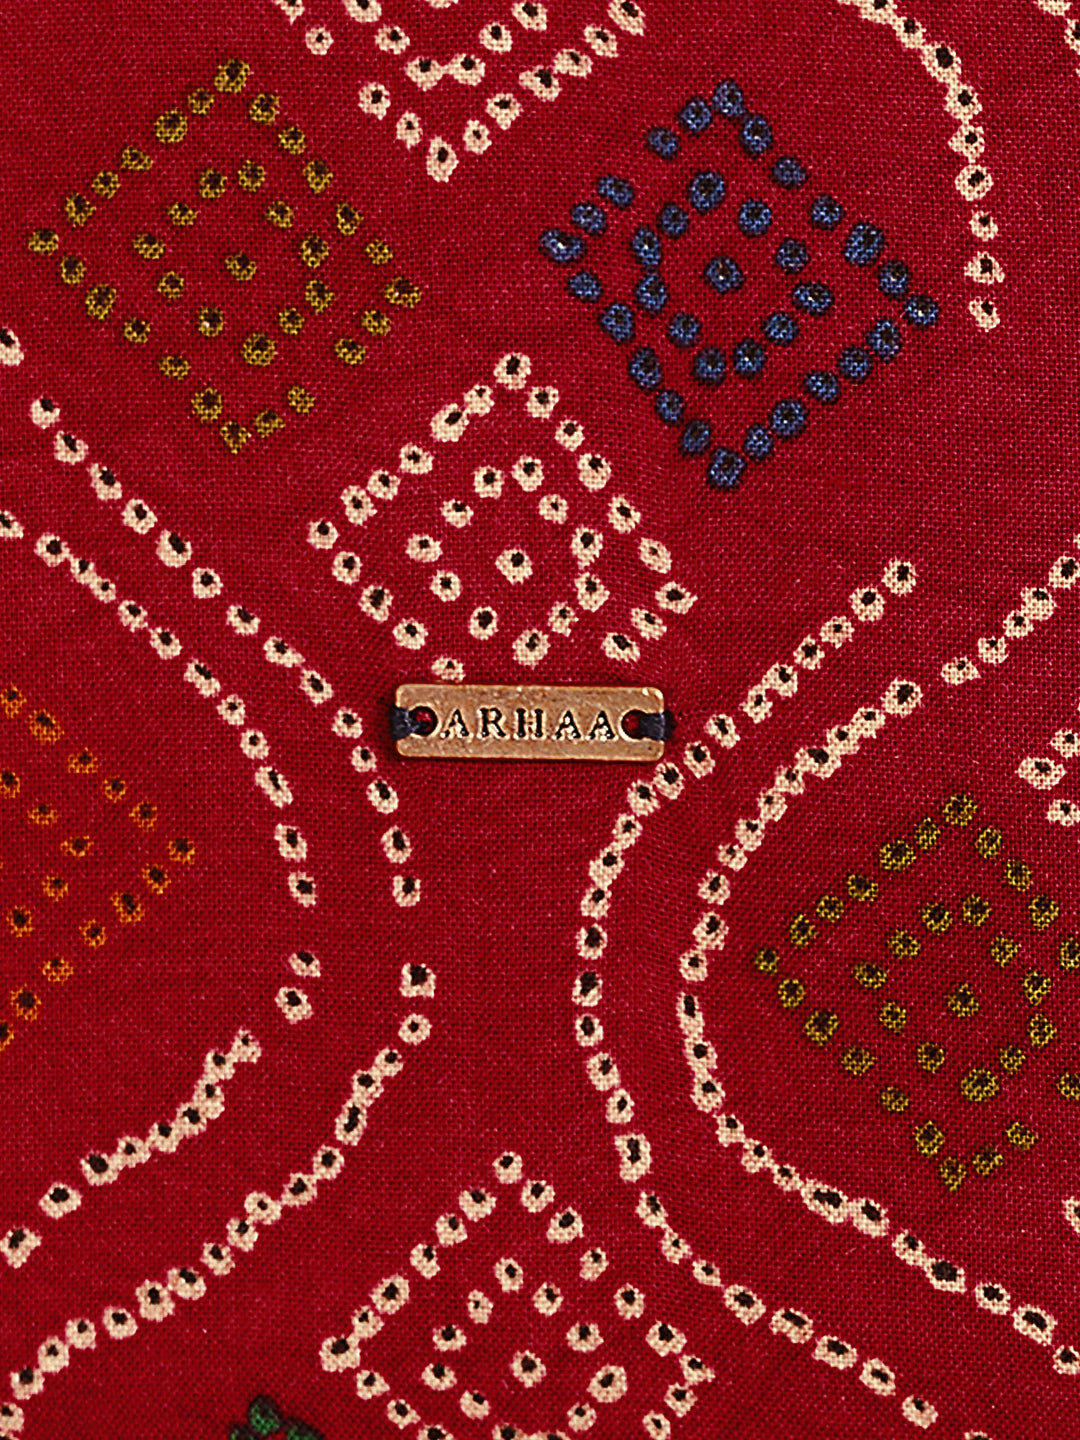 Red Printed Tie Up Neck Dress - ARH960R